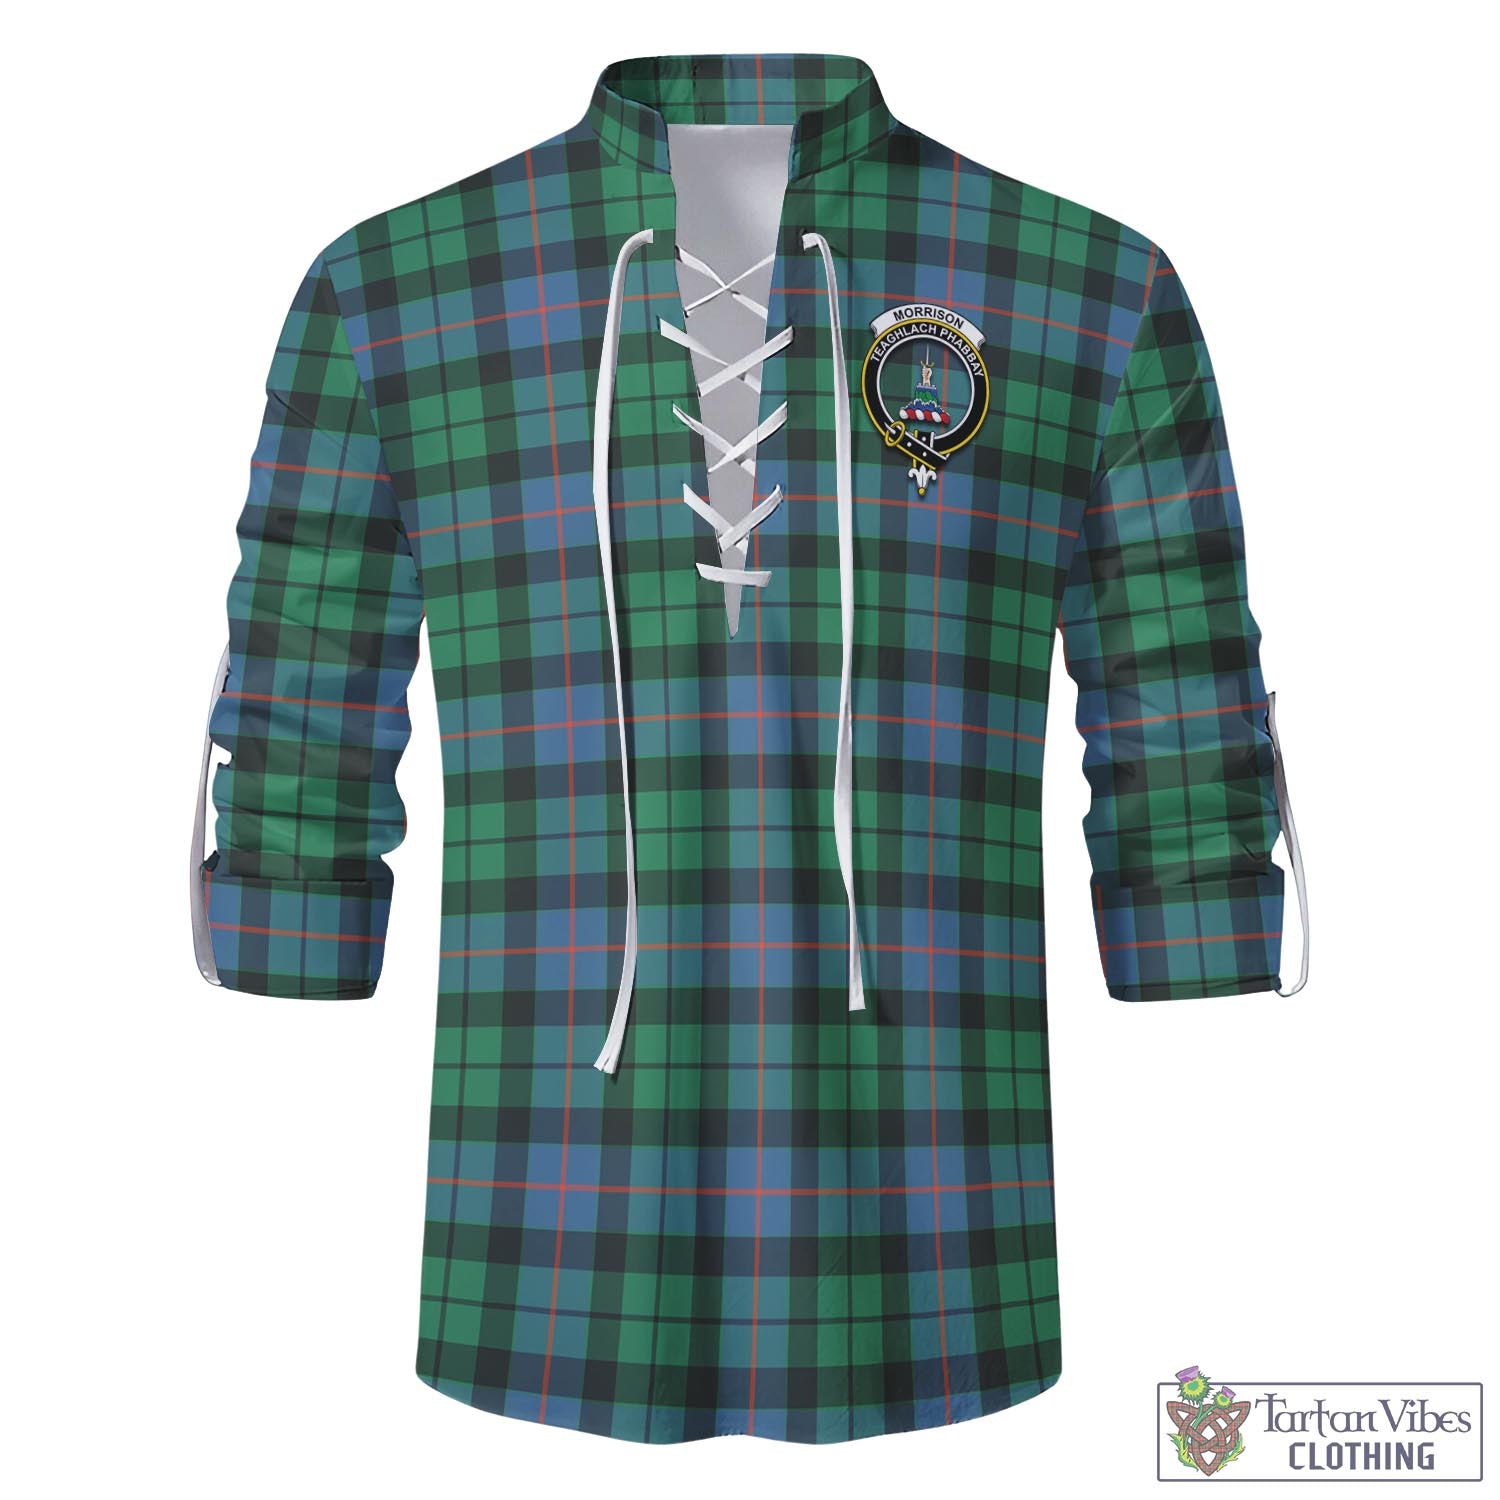 Tartan Vibes Clothing Morrison Ancient Tartan Men's Scottish Traditional Jacobite Ghillie Kilt Shirt with Family Crest